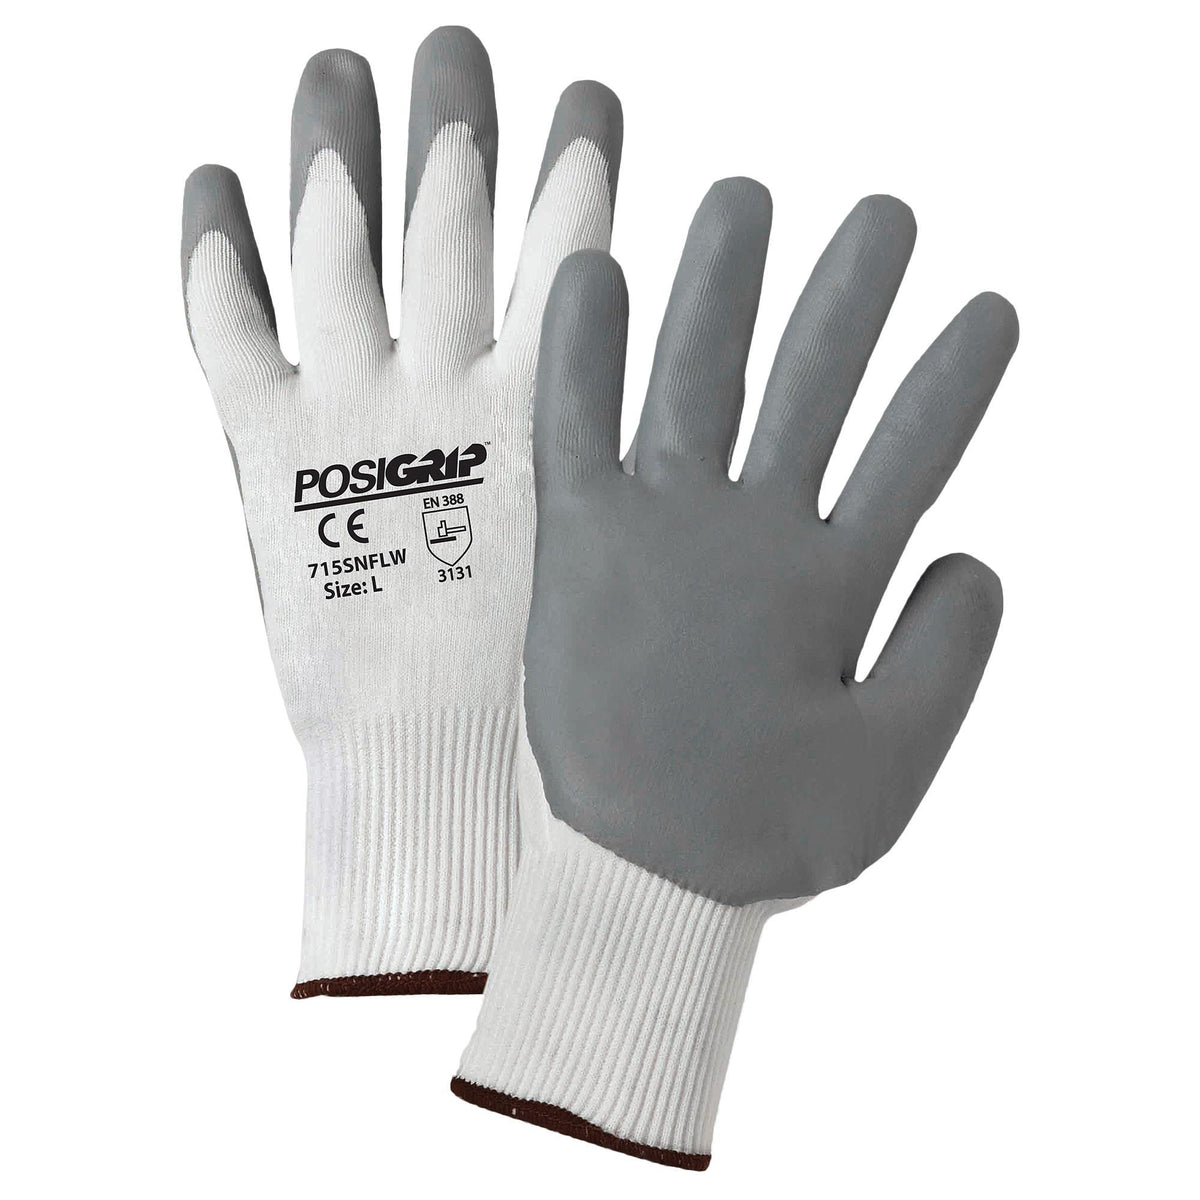 Lunar Foam Gloves with Foam Palm 1pair